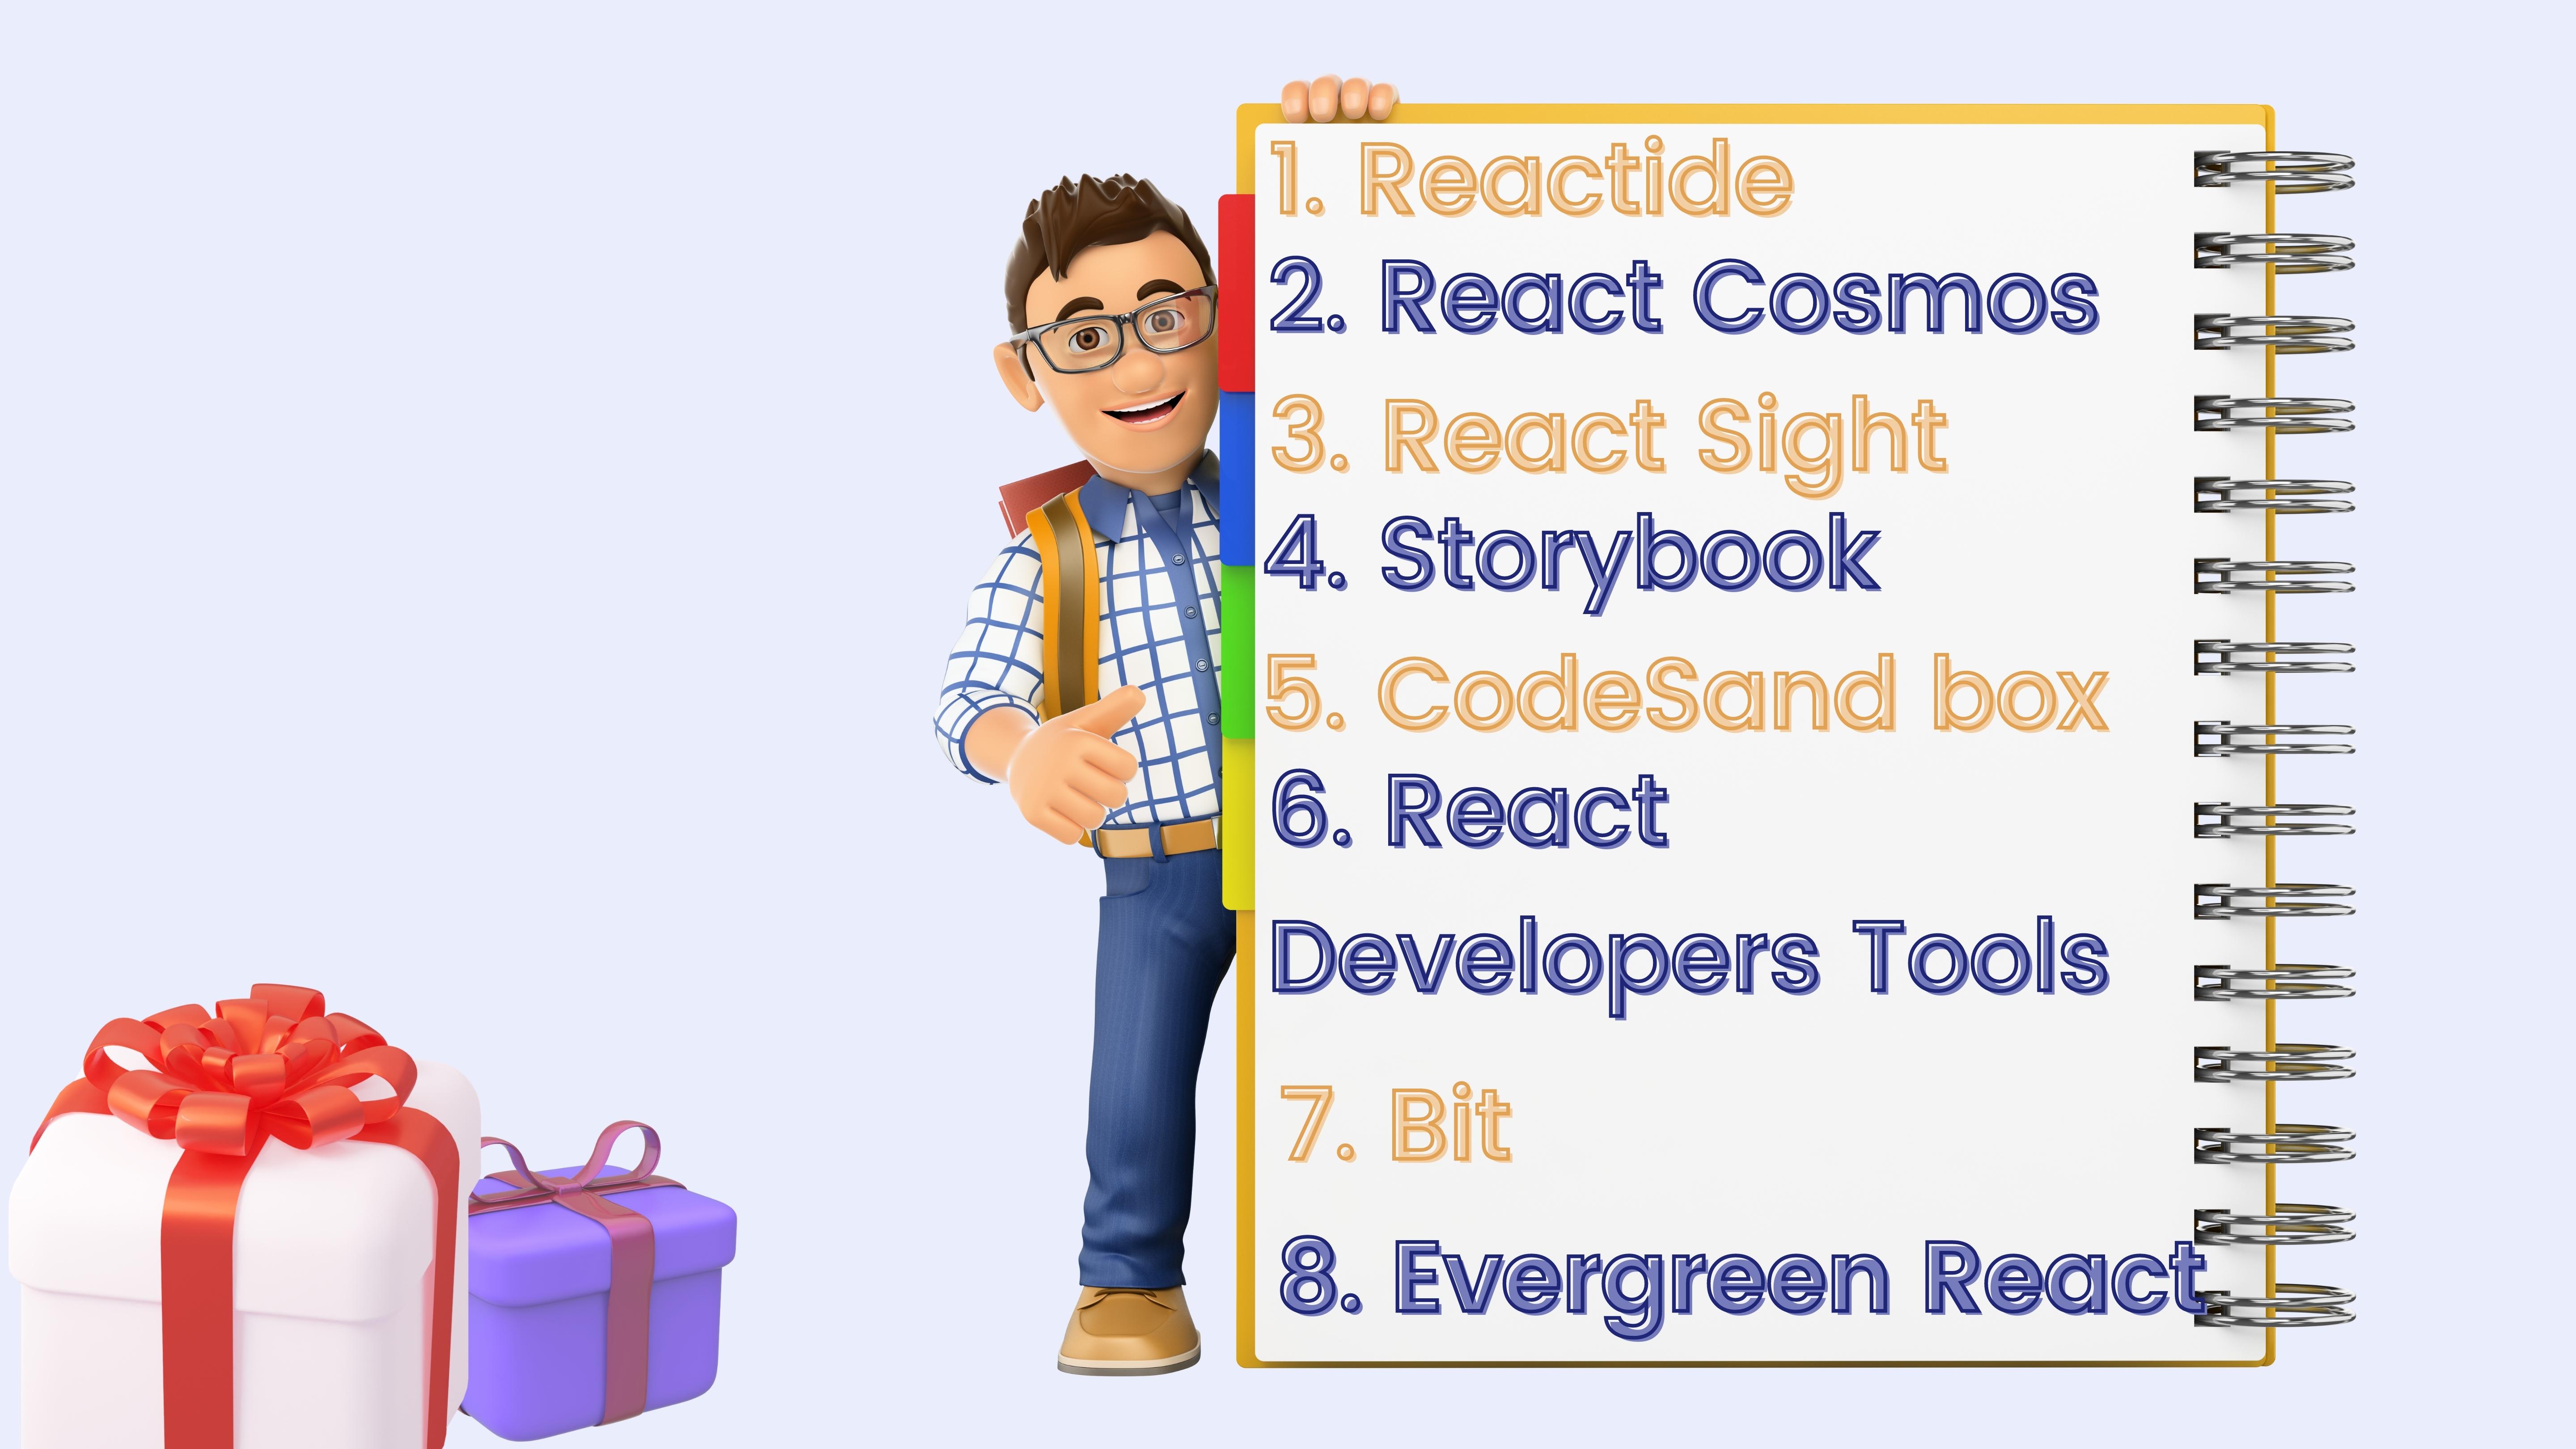 8 Best Tools For React Development from ByteFum